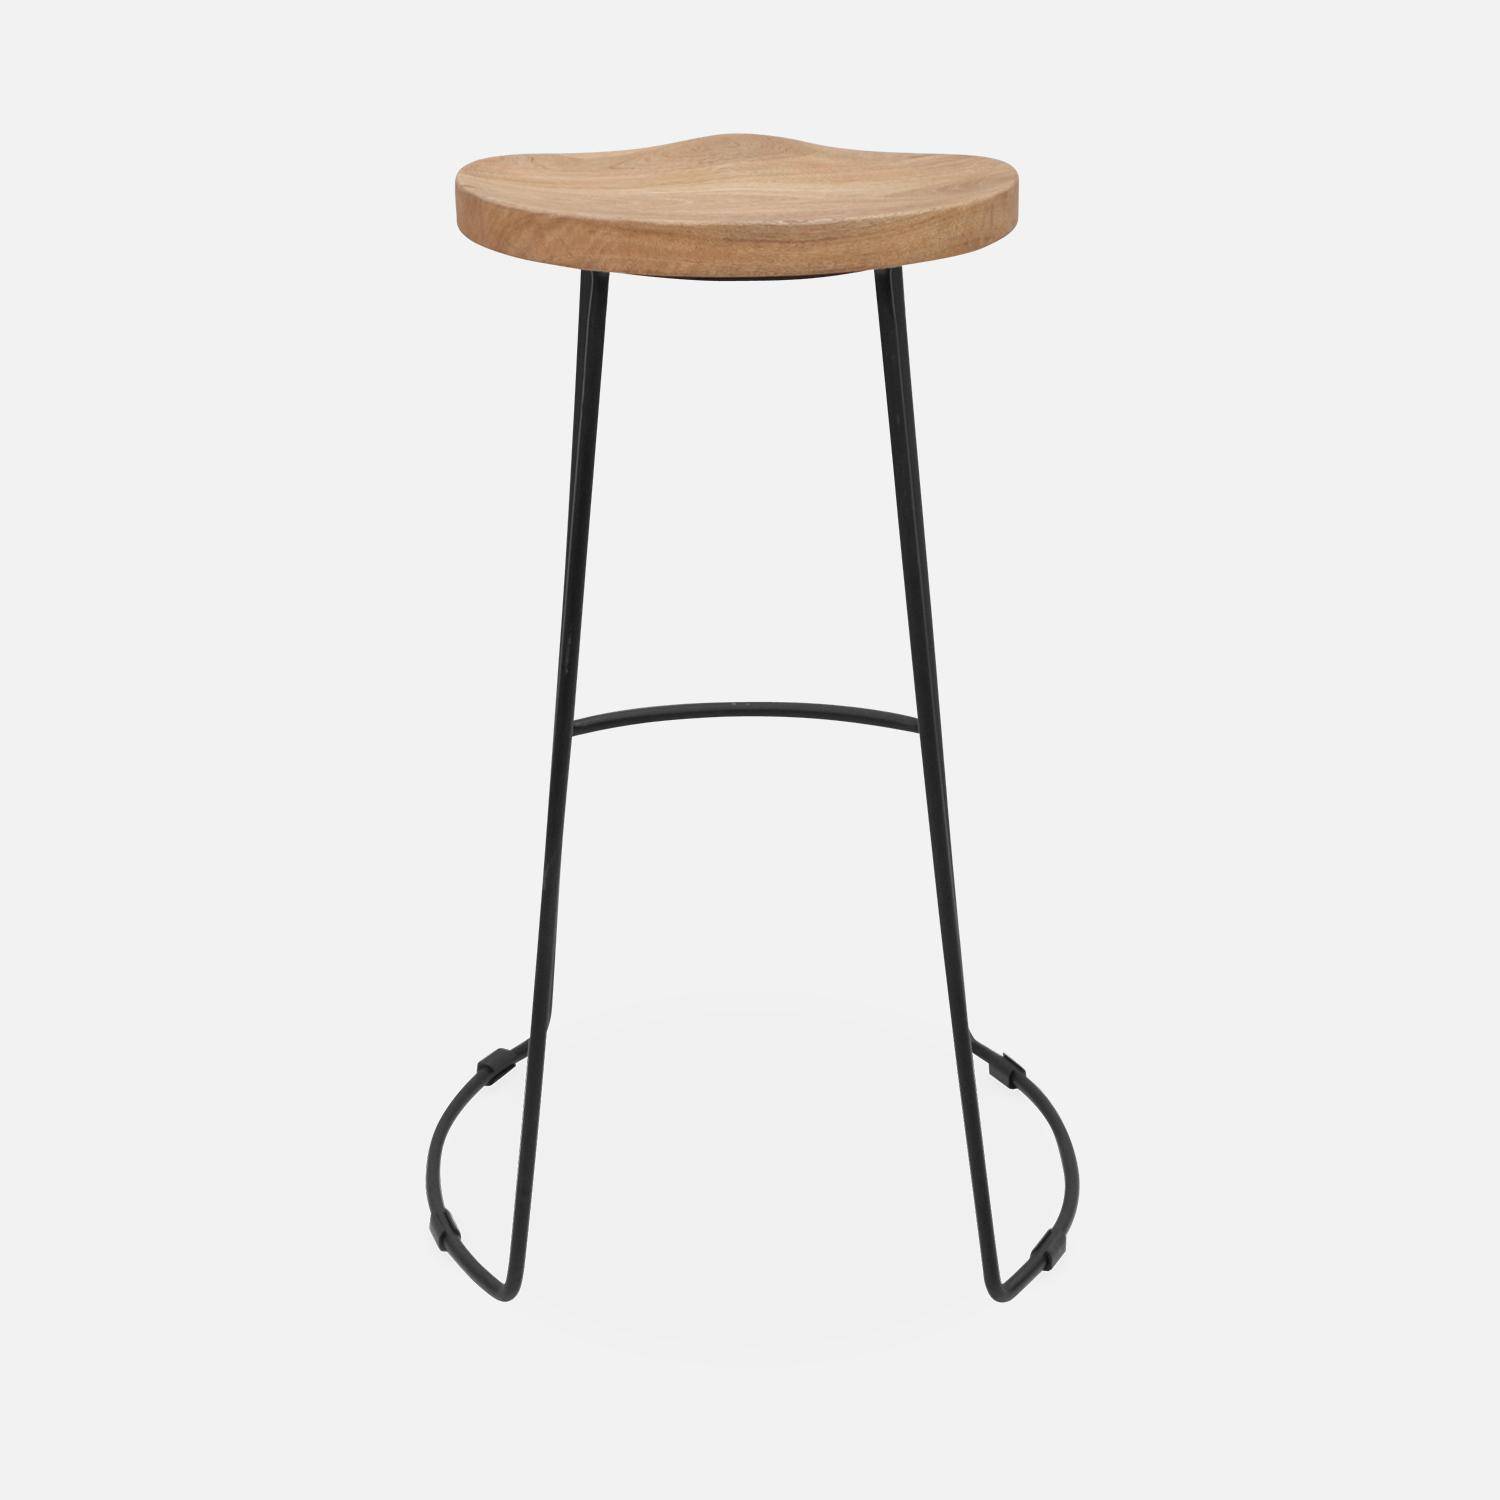 Pair of industrial metal and wooden bar stools, 47x40x75cm, Jaya, Natural, Mango wood seat, black metal legs Photo6